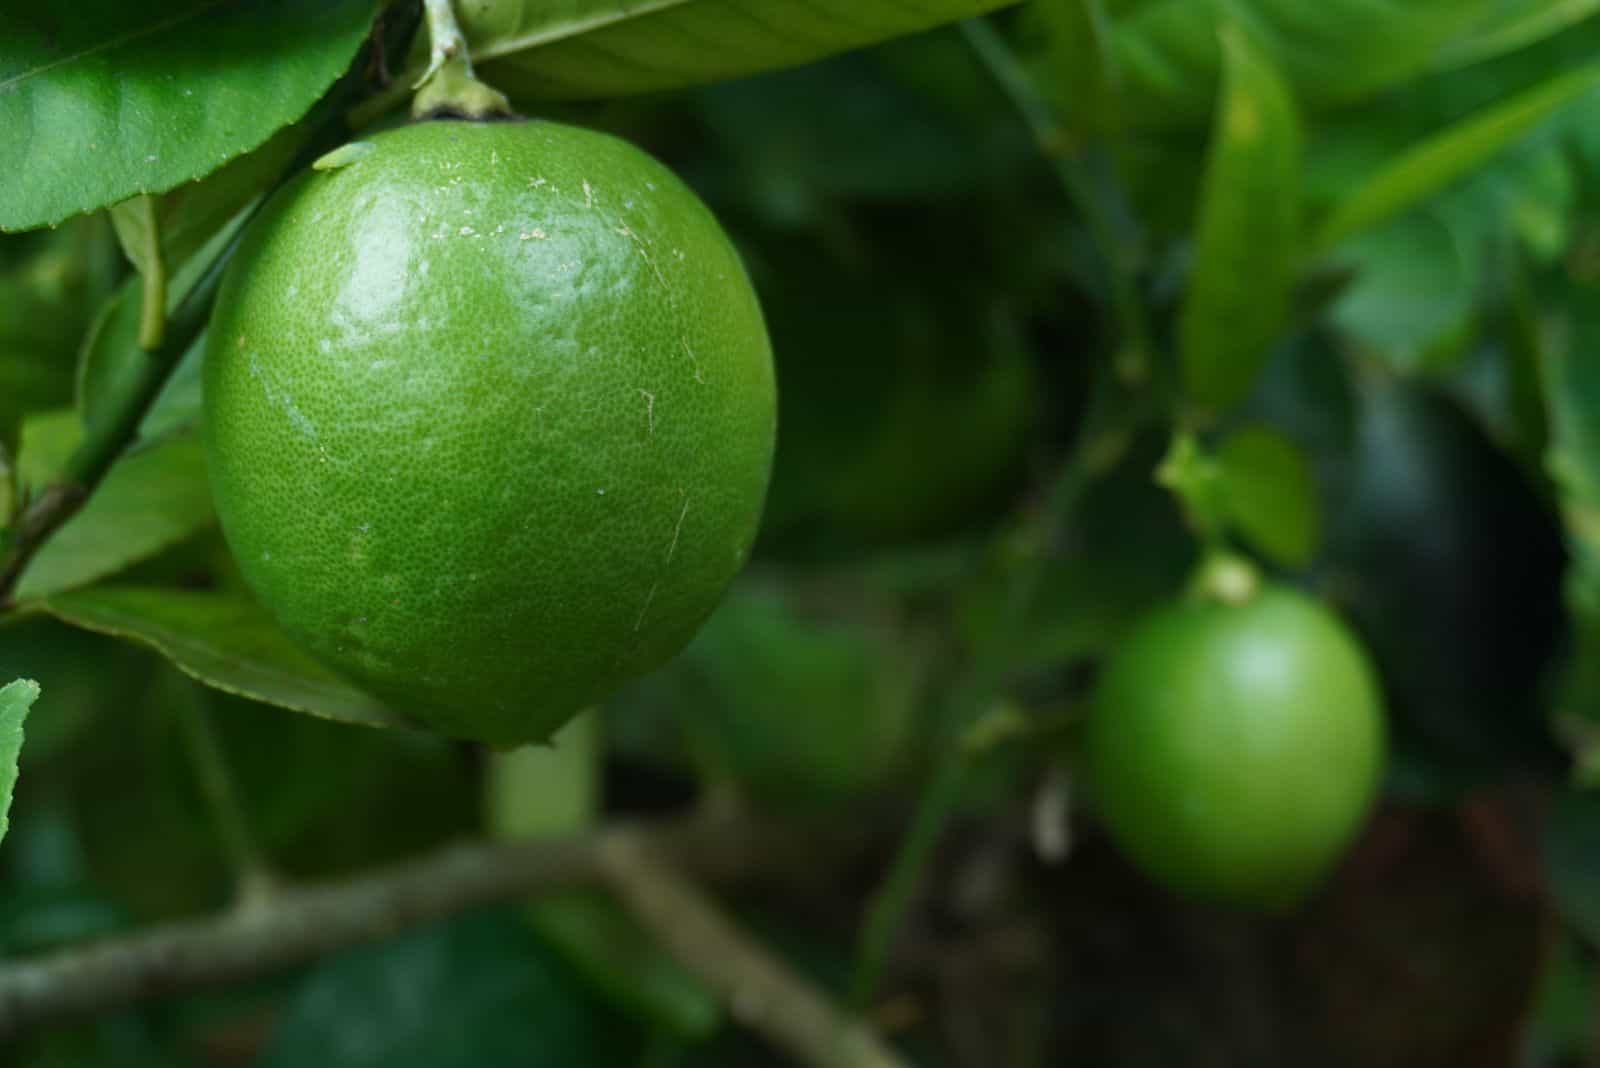 green Dorshapo lemon on a branch